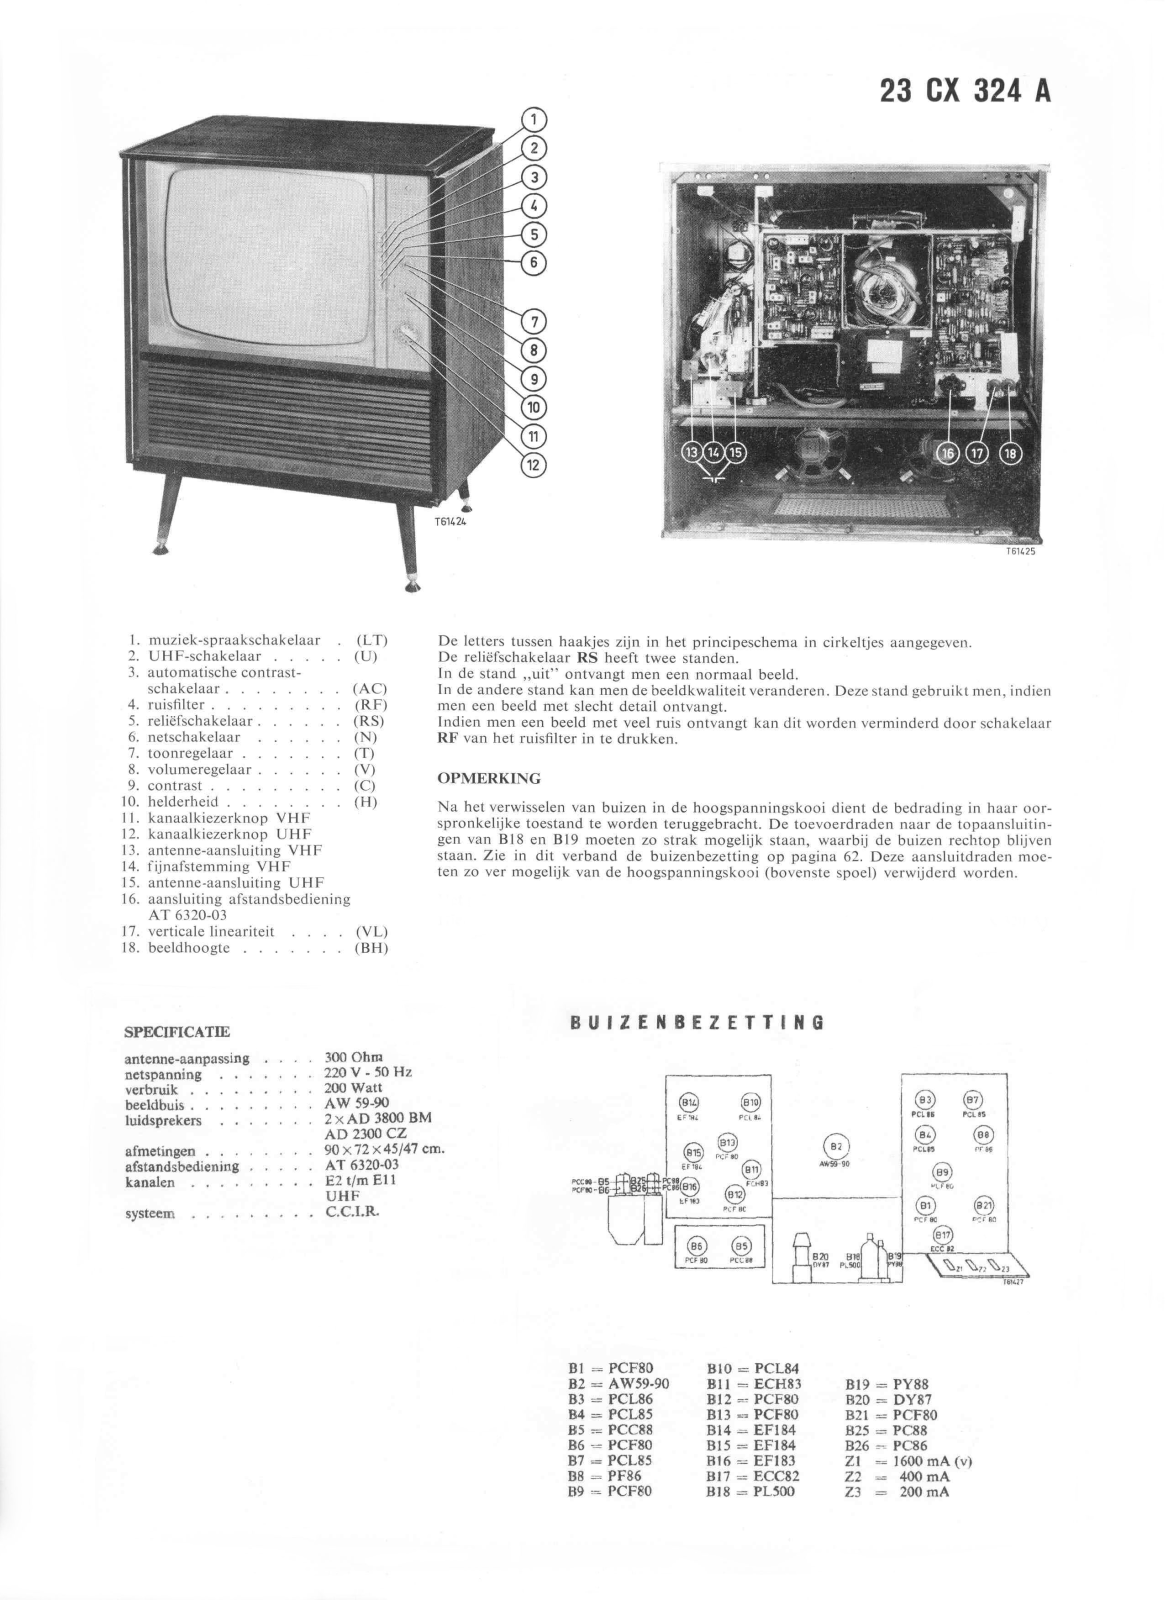 Philips 23CX324A Schematic